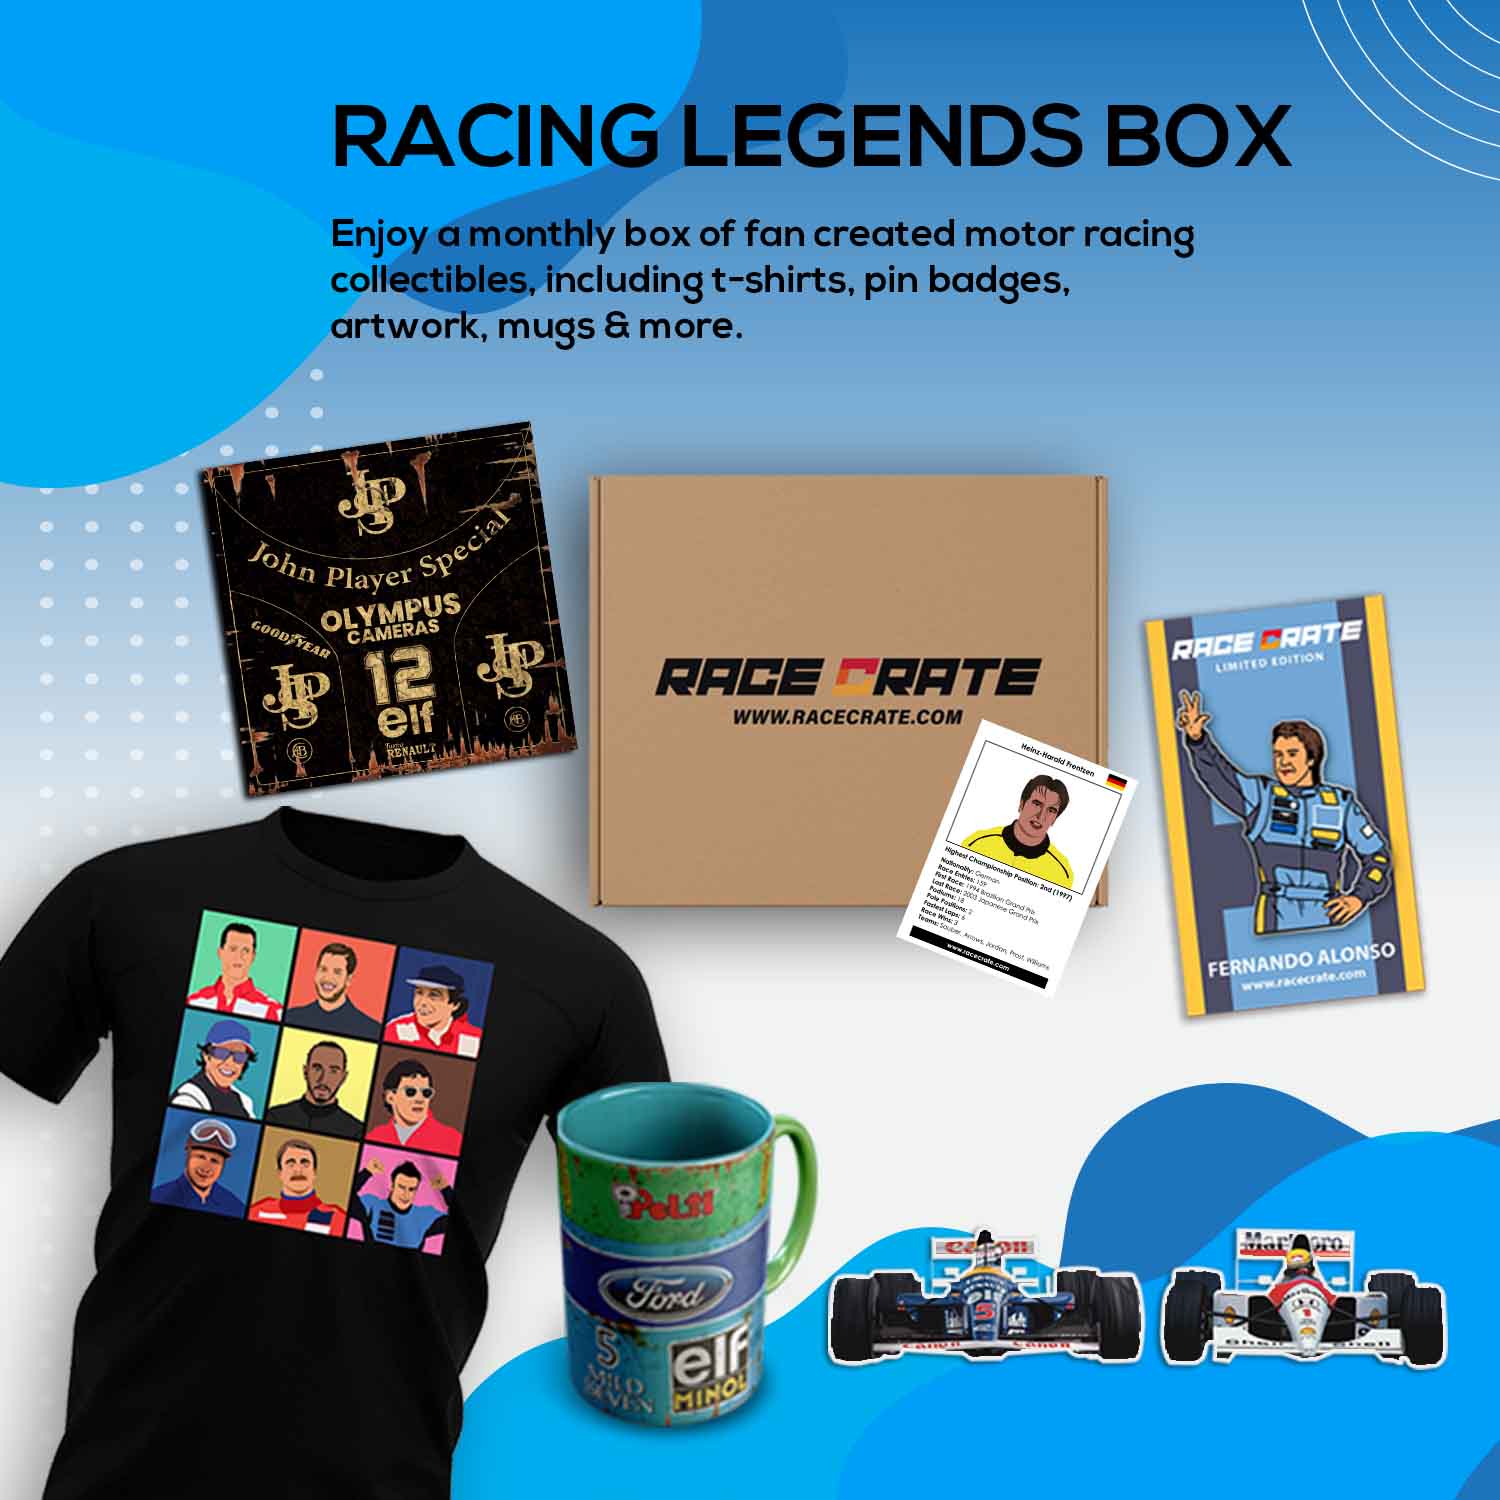 Race Crate Racing Legends Box (Volume 1)